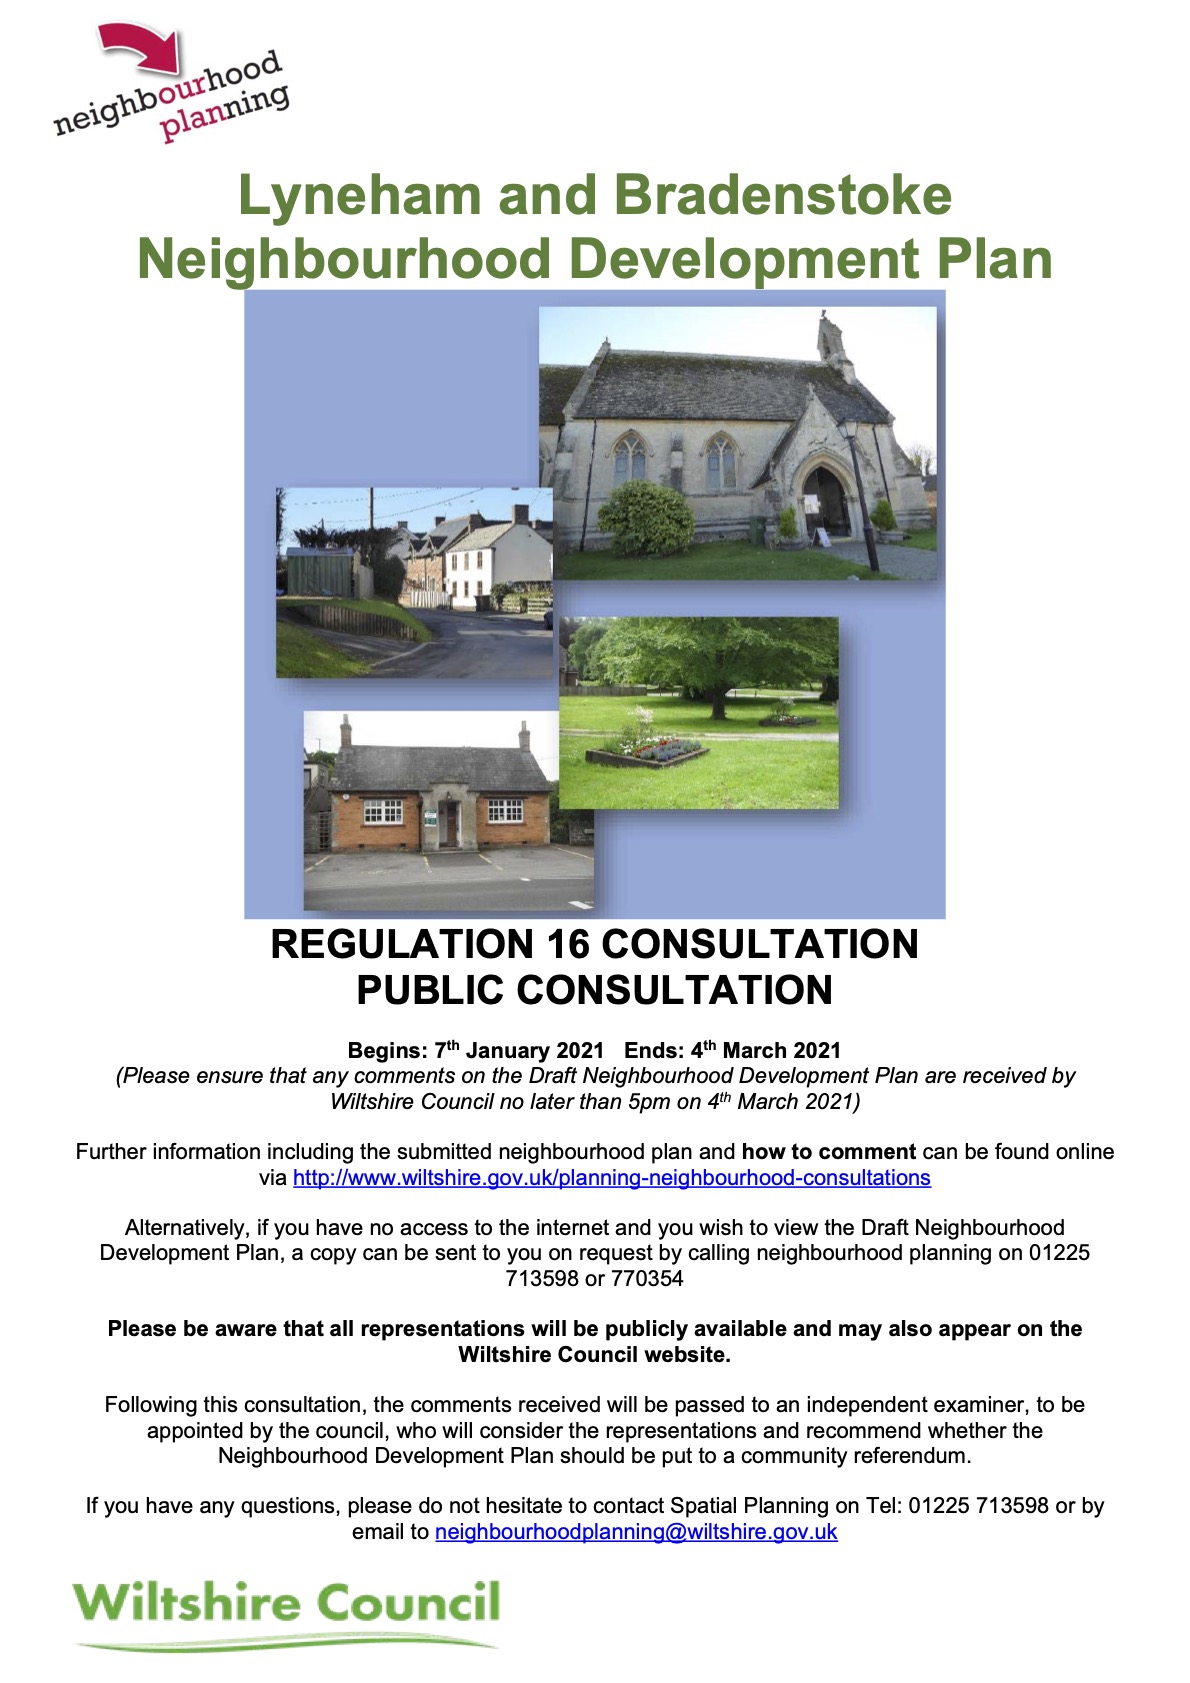 Neighbourhood Development Plan Out For Regulation 16 Consultation until Thursday 4th March 2021